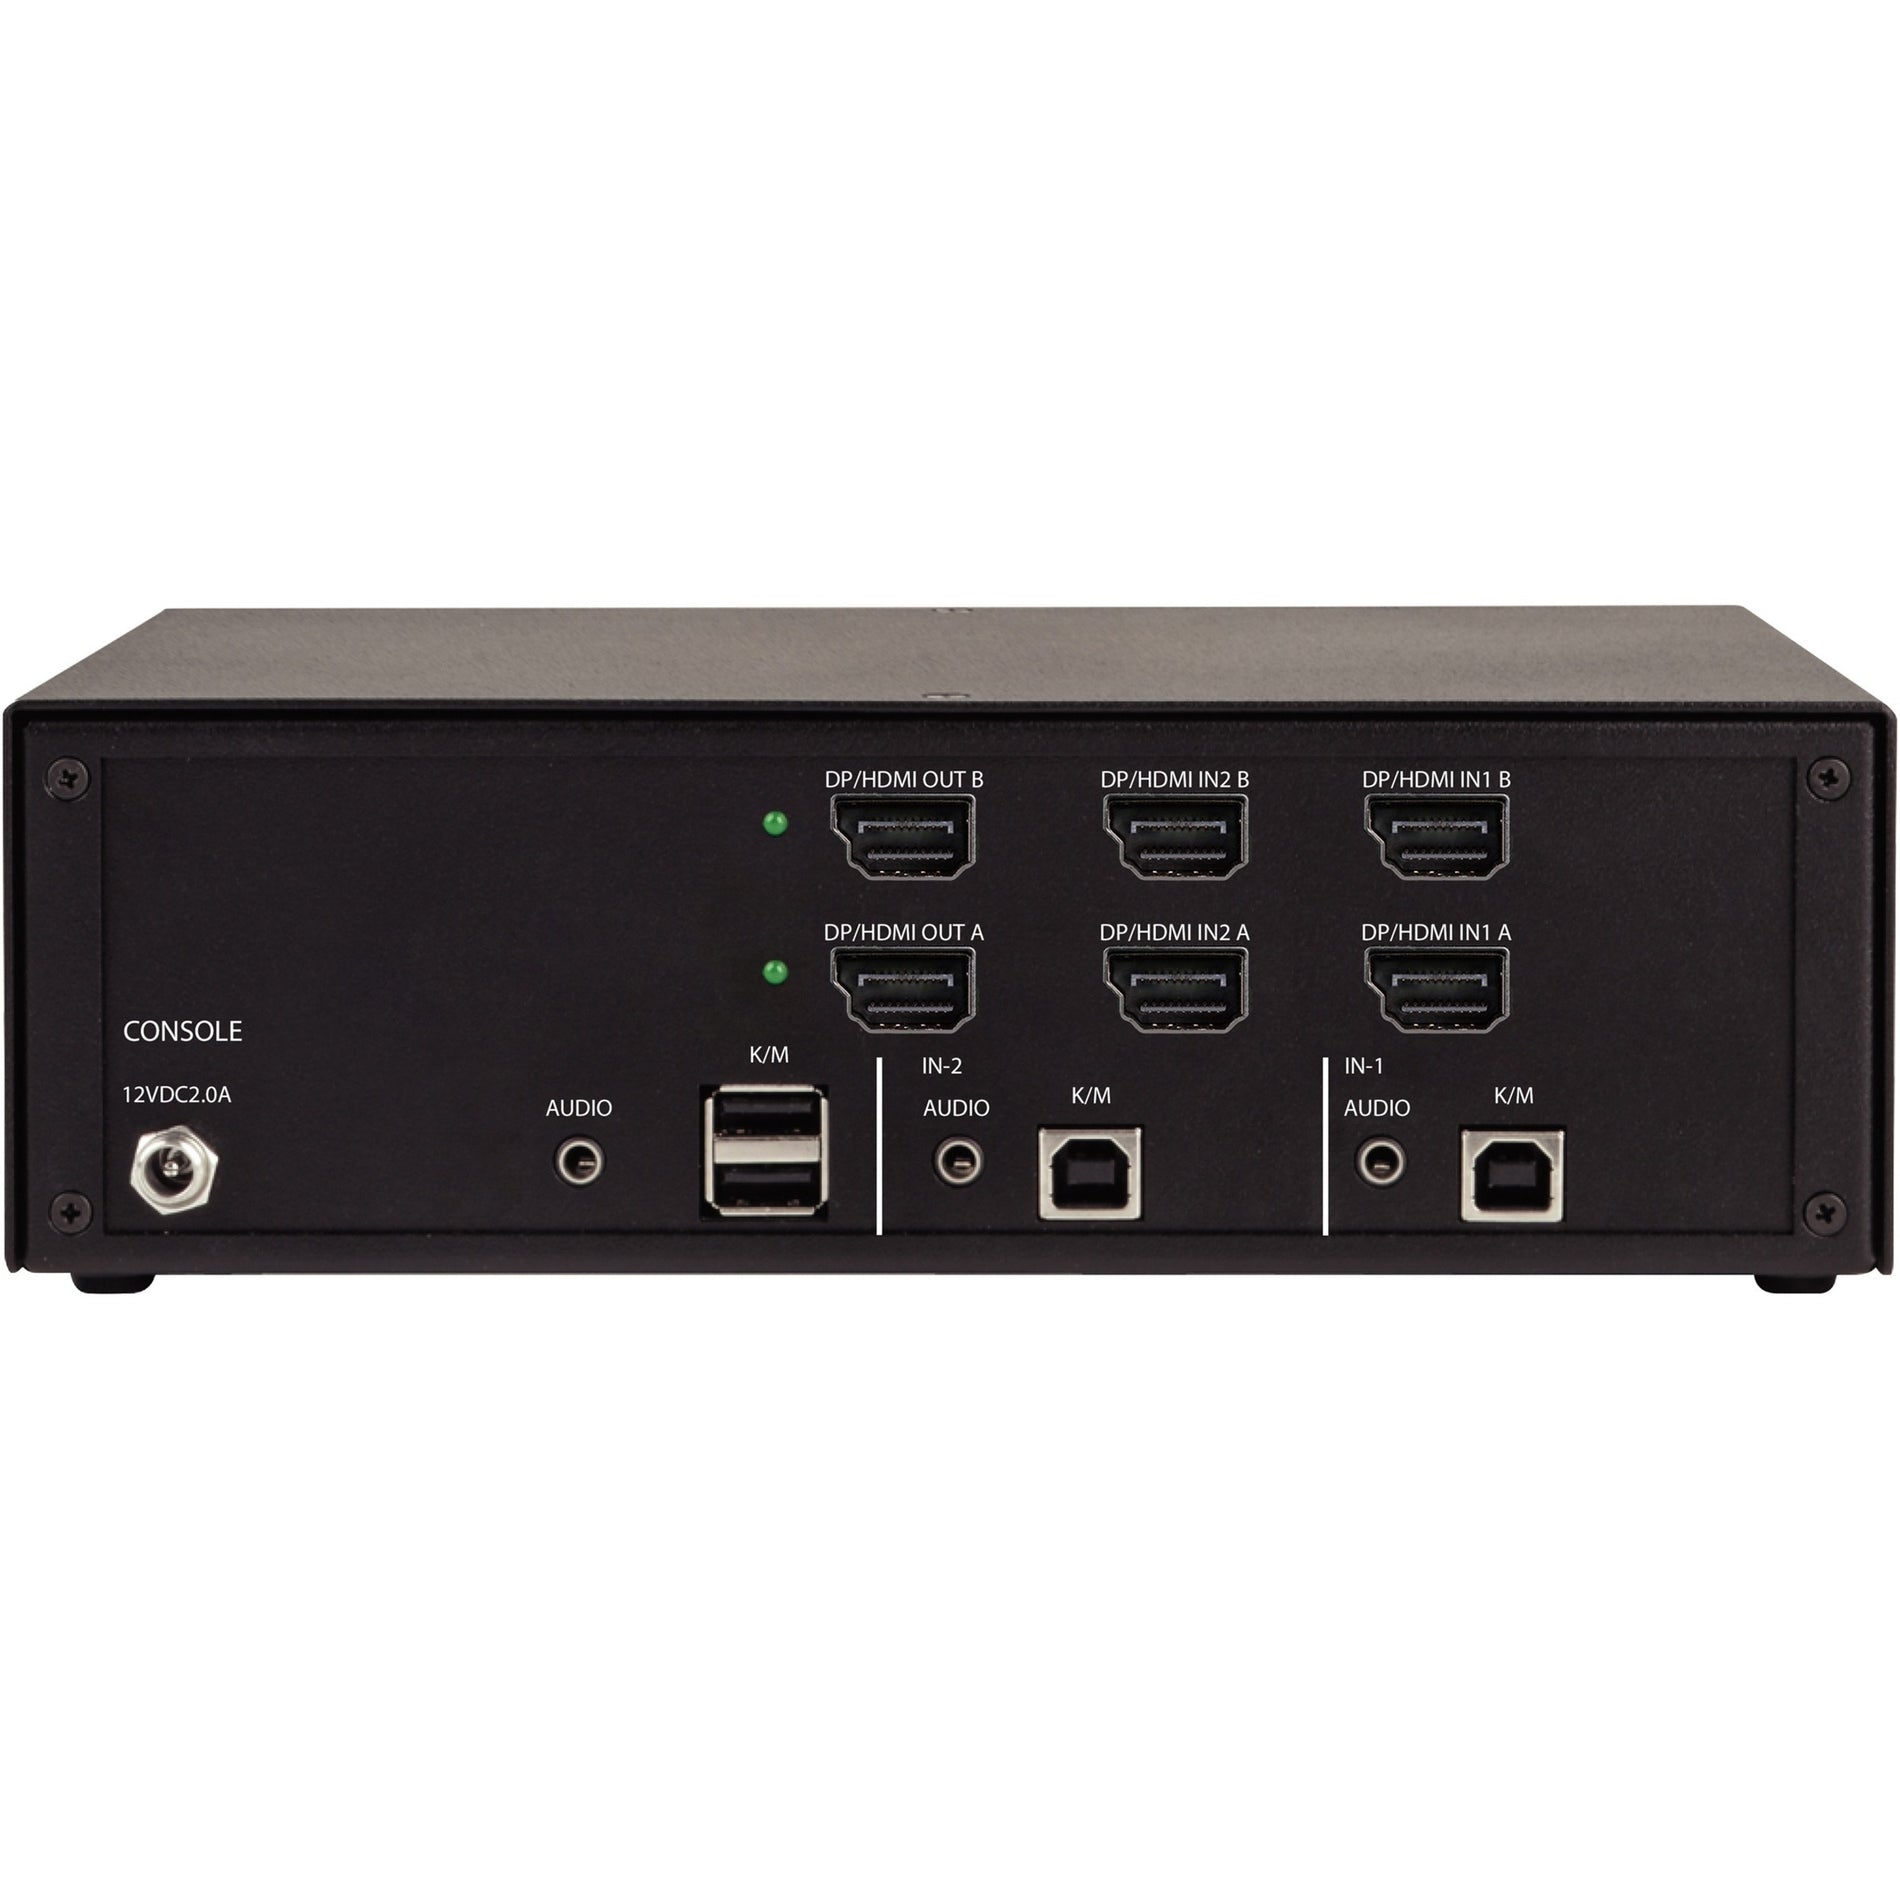 Caja Negra KVS4-2002HV Conmutador KVM Seguro - FlexPort HDMI/DisplayPort 4 Puertos USB Resolución 3840 x 2160 Garantía de 1 Año  Marca: Black Box